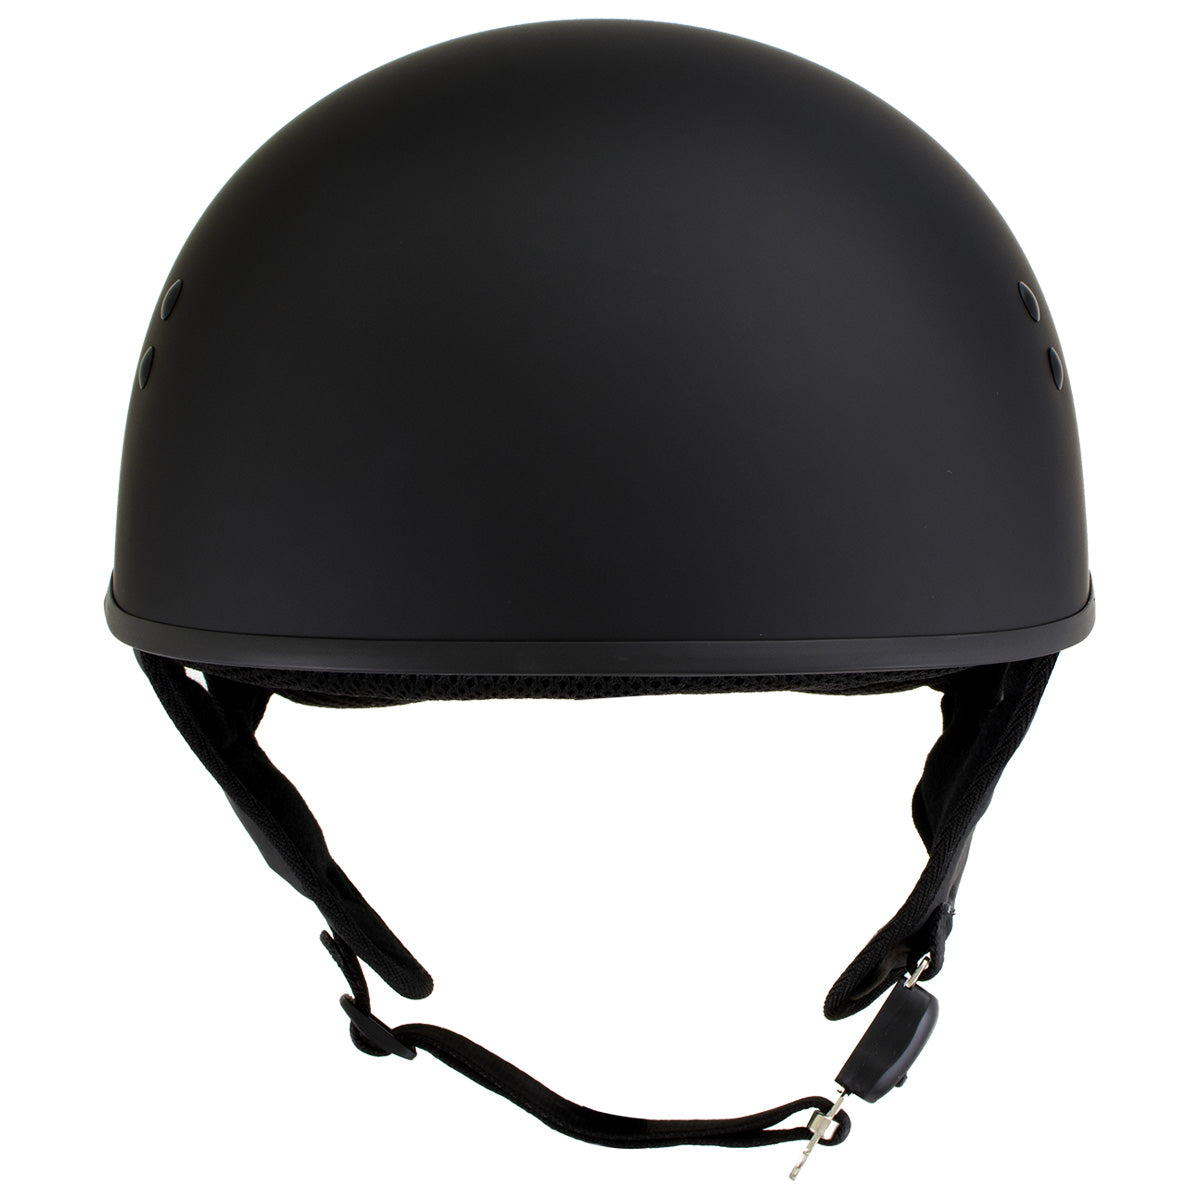 Hot Leathers HLD1001 'Flat Matte Black' Motorcycle DOT Skull Cap Classic Half Helmet for Men and Women Biker